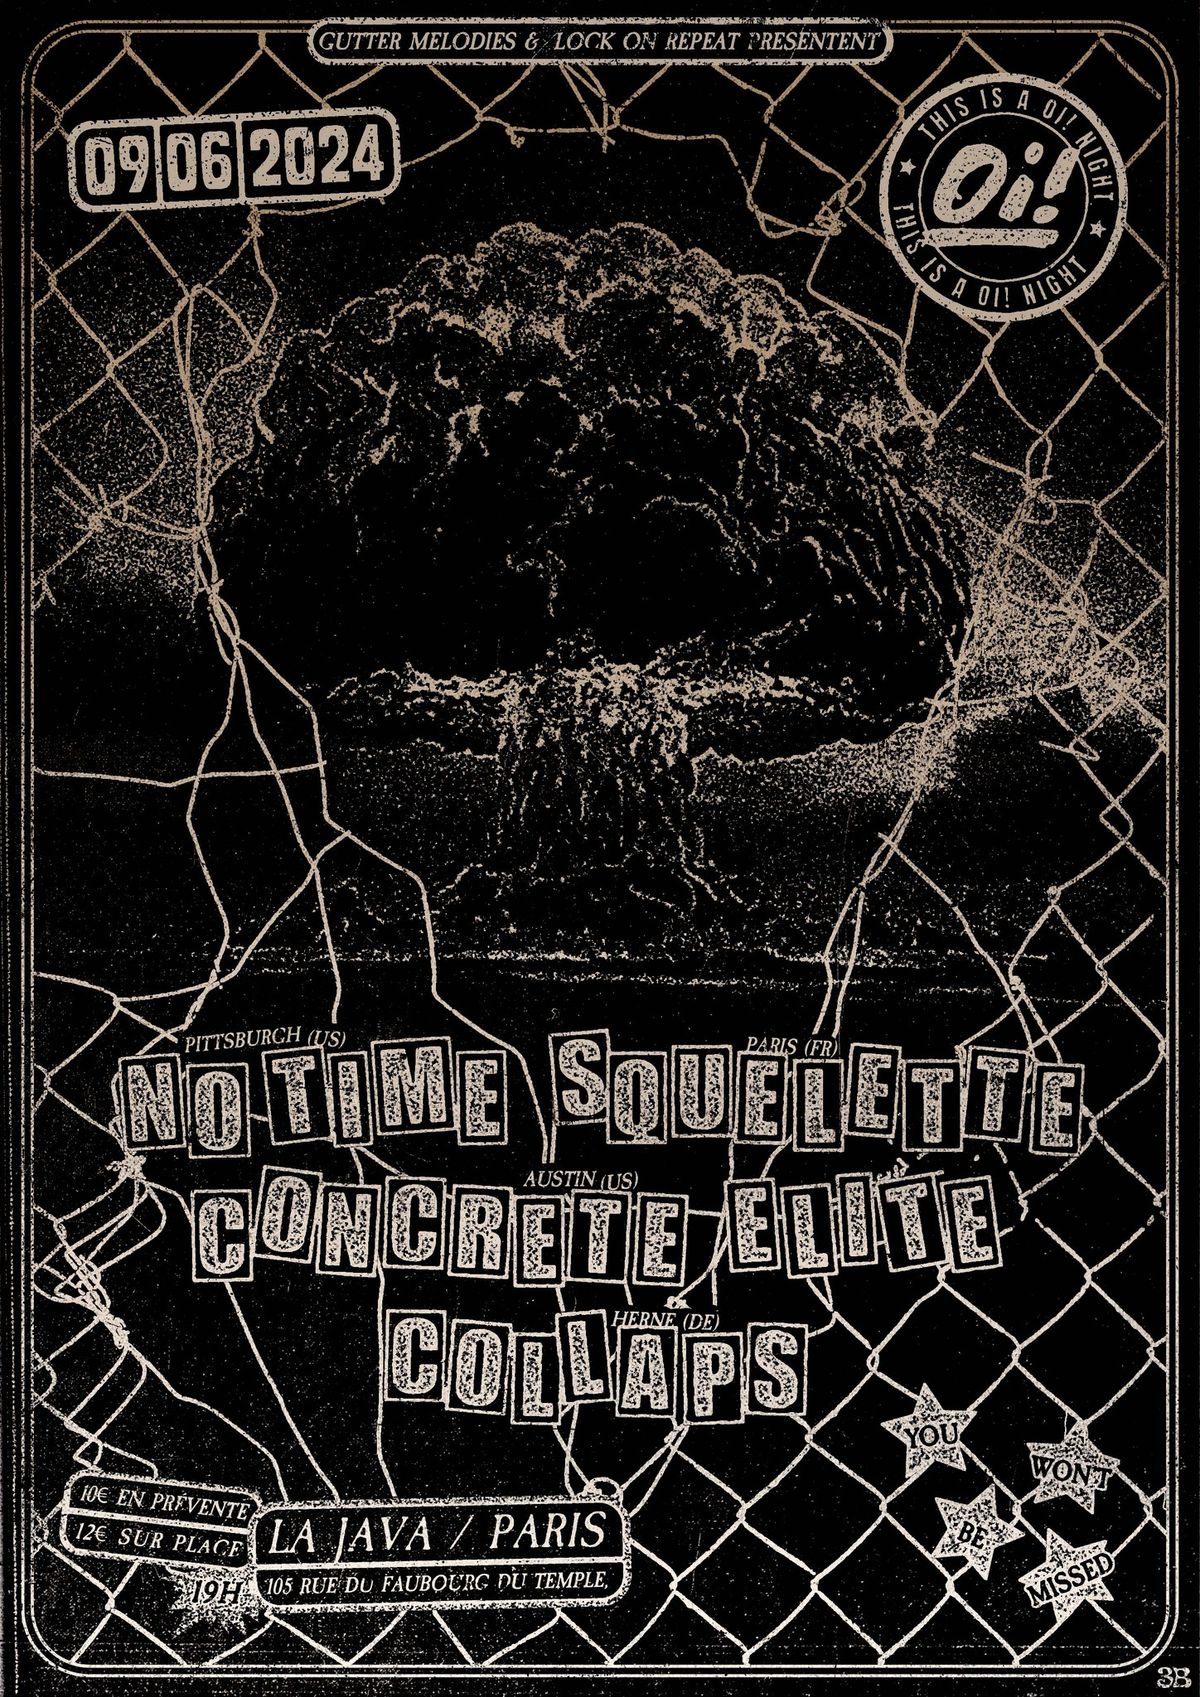 No Time (Punk) \u2022 Squelette (Oi!) \u2022 Concrete Elite (Oi!) \u2022 Collaps (Punk) \/\/ La Java - PARIS 